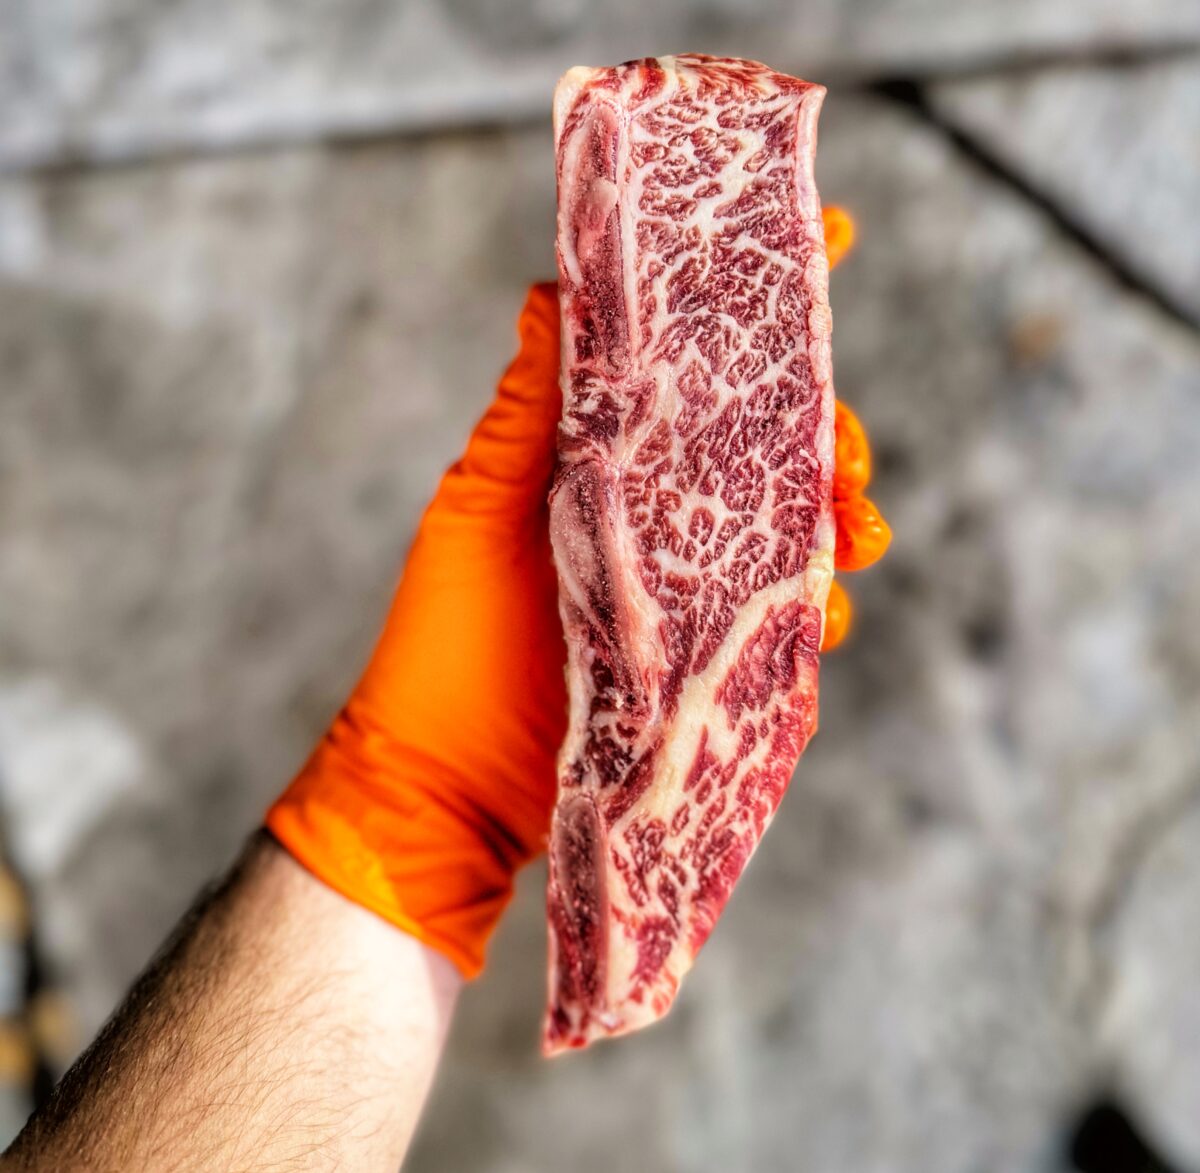 A marbled beef short rib before seasoning.